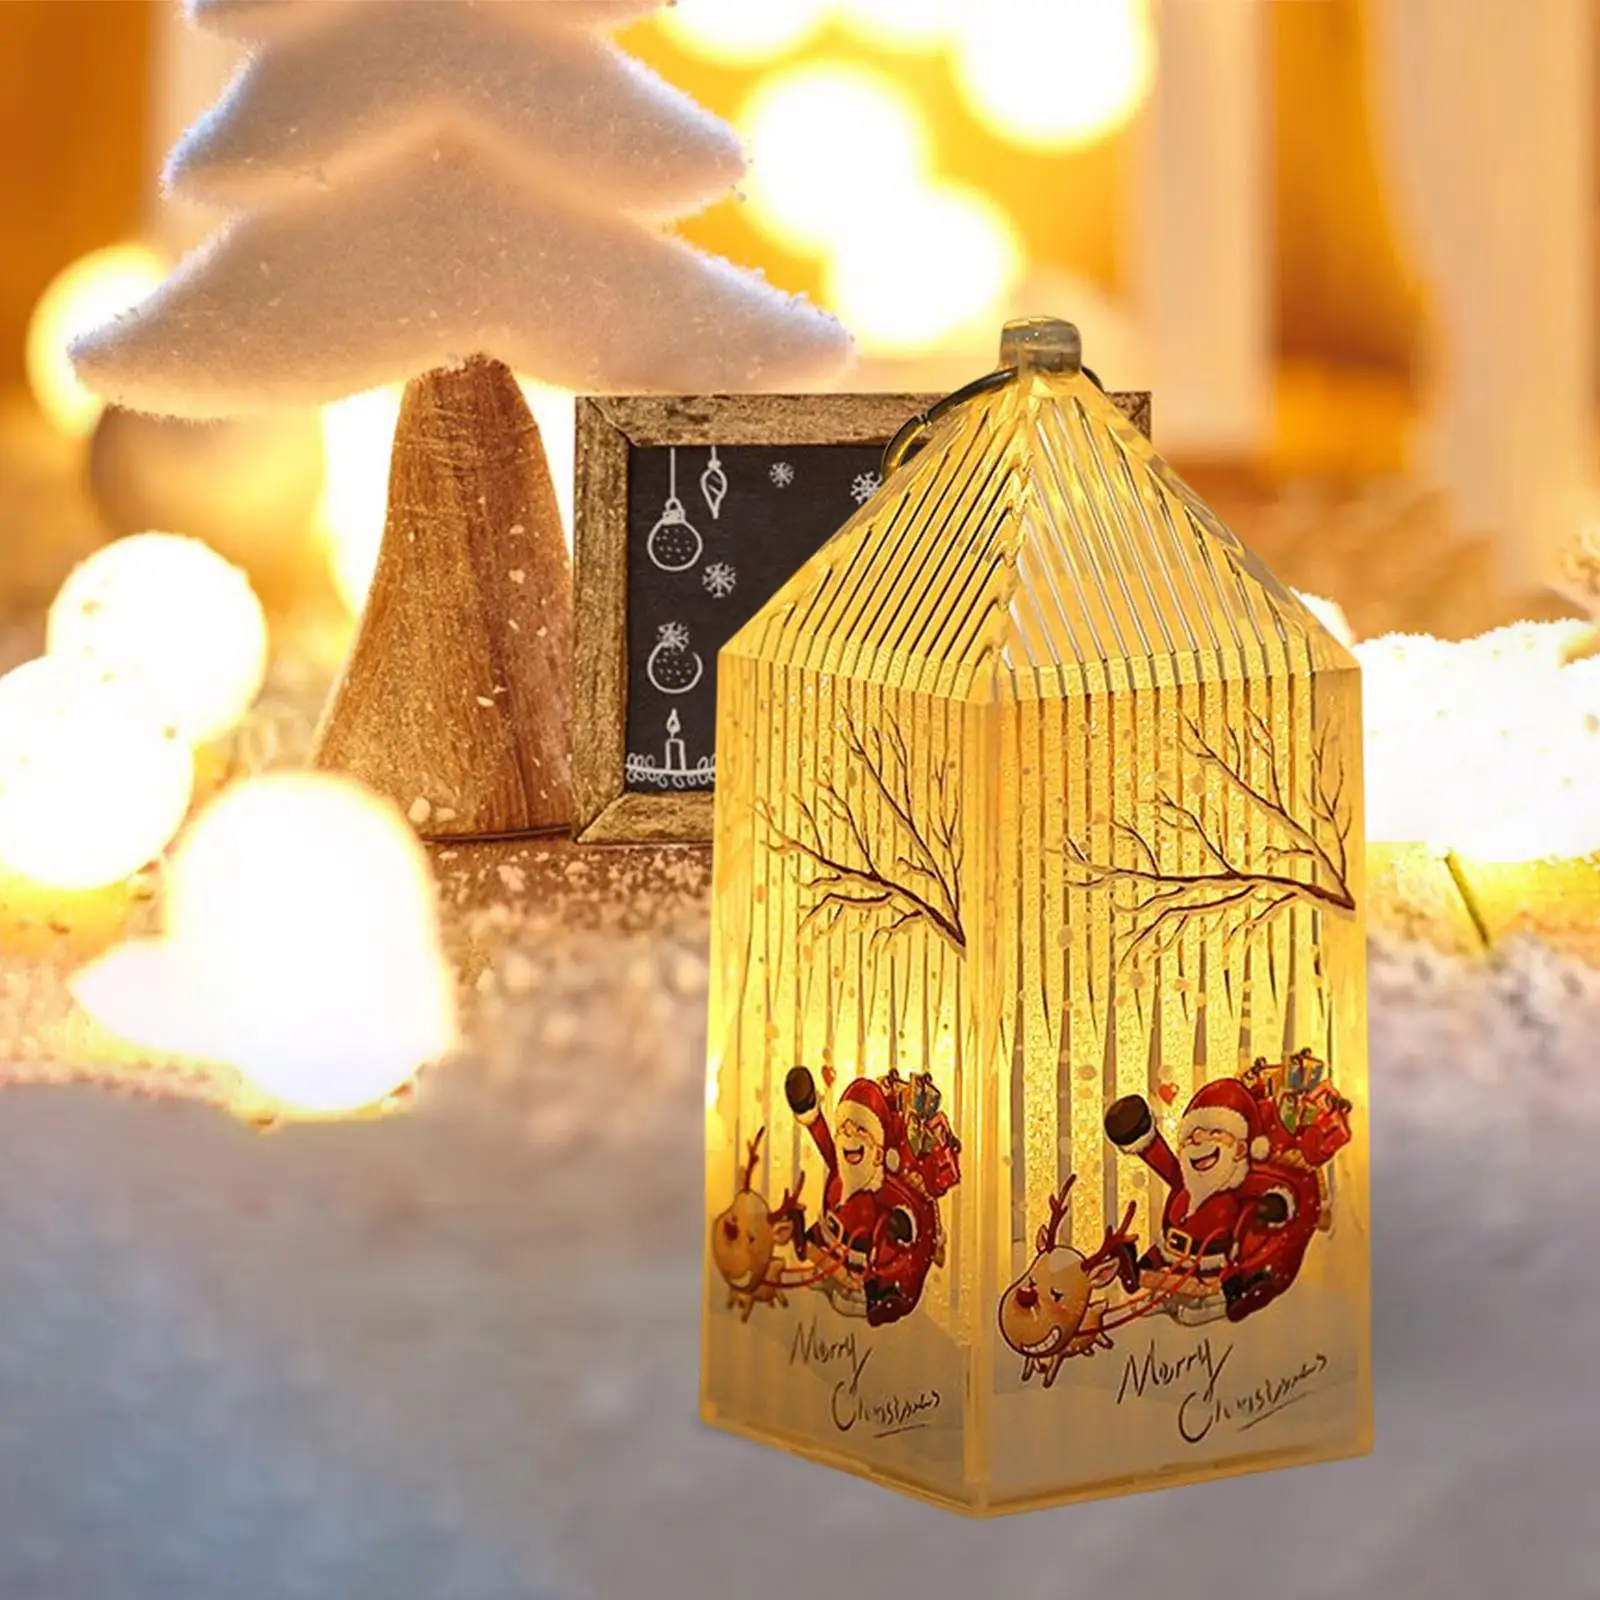 Christmas Lantern Lamp Night Light Ornament Hanging Decorative for Home Table Centerpiece Festival Fireplace Decor